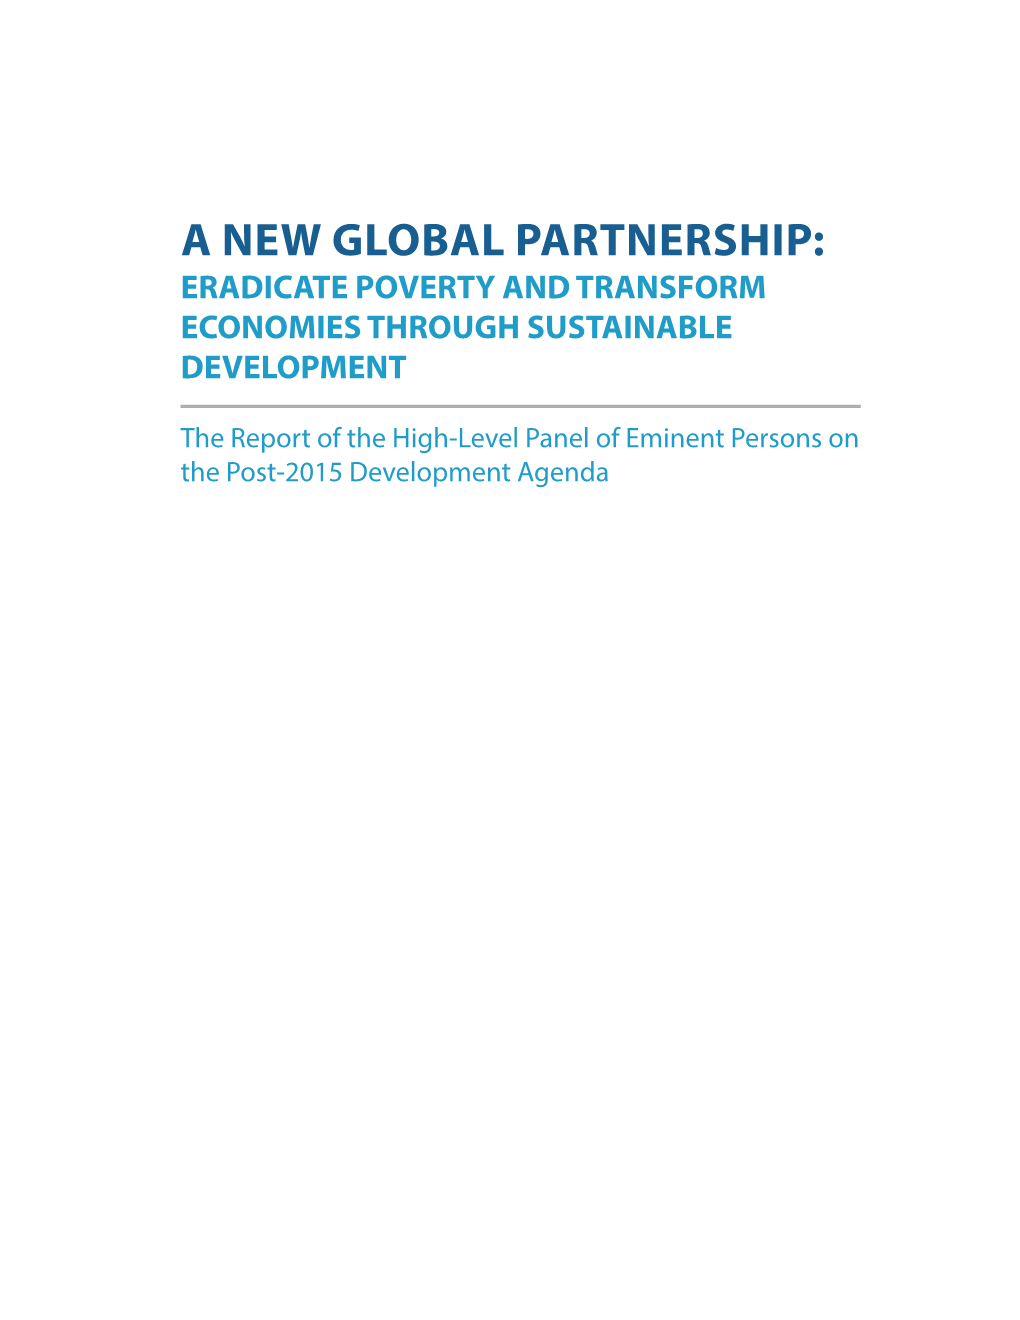 A New Global Partnership: Eradicate Poverty and Transform Economies Through Sustainable Development